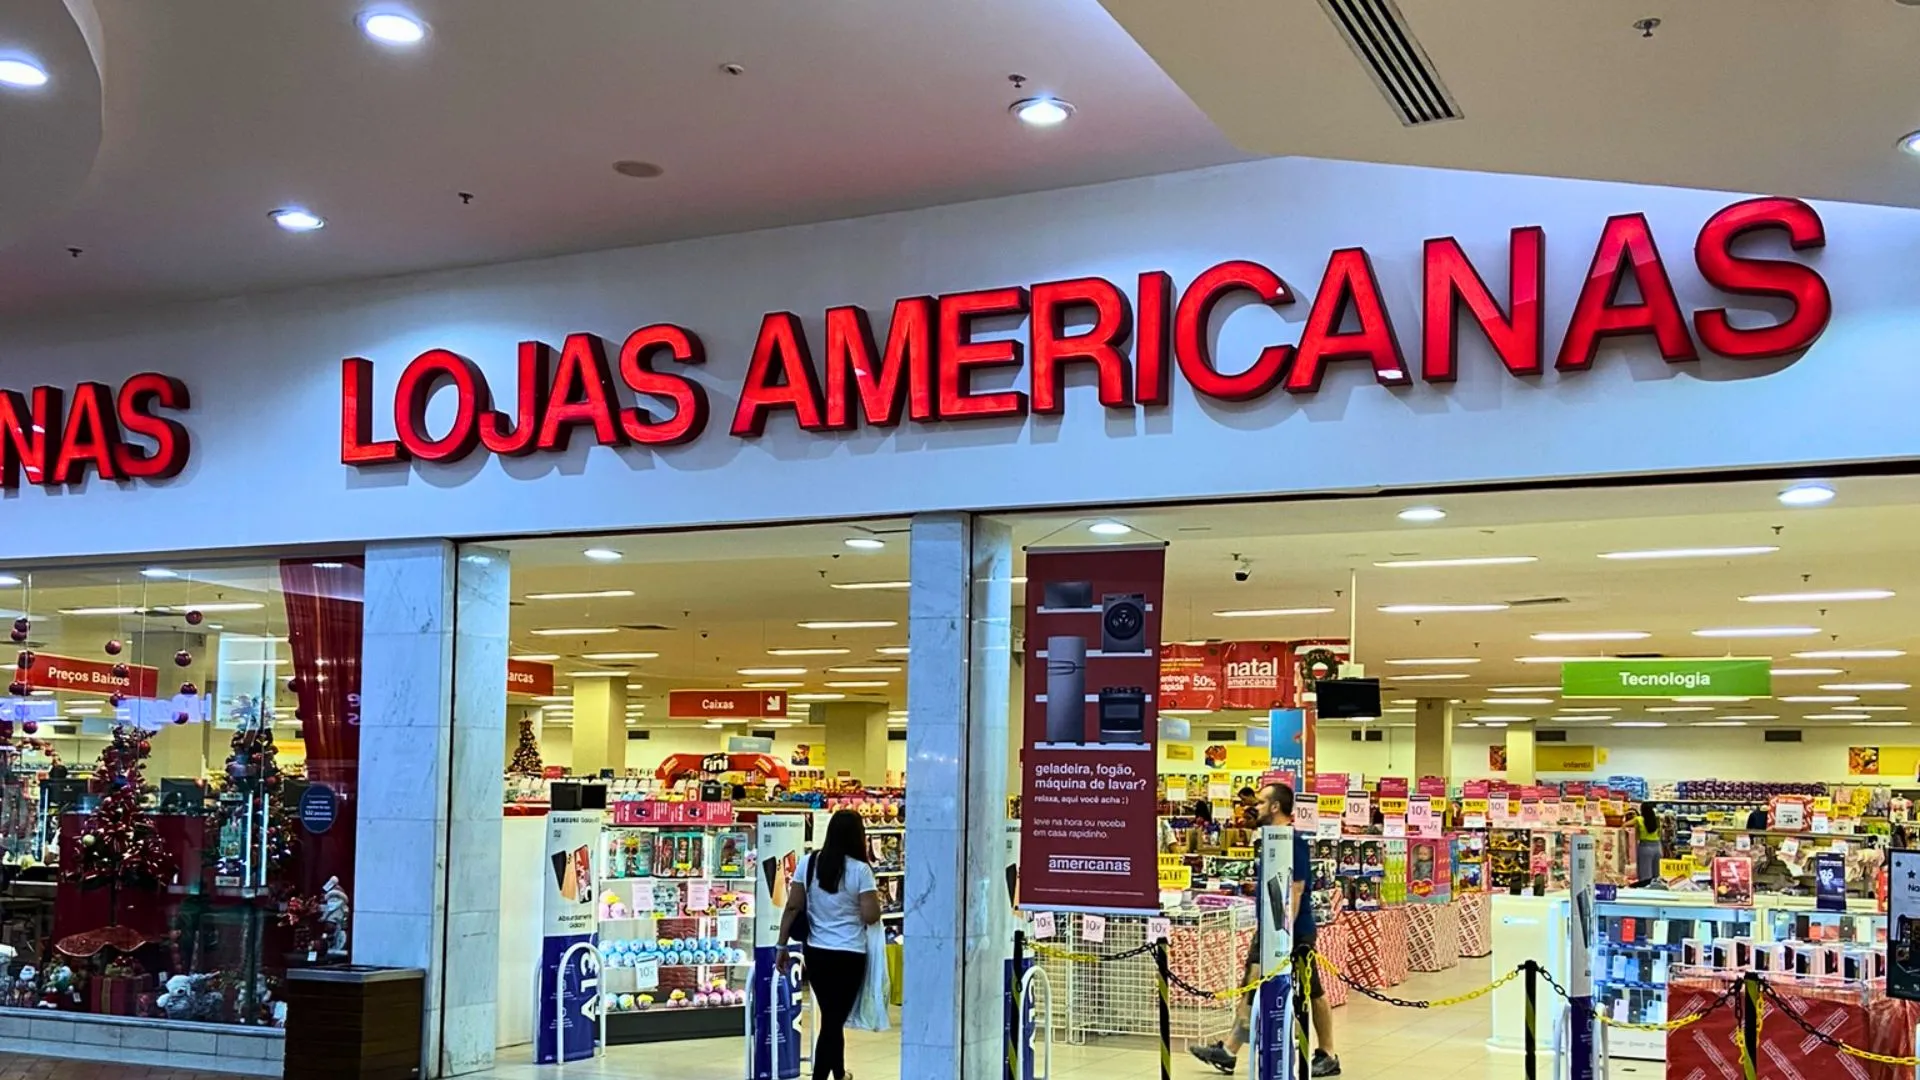 Fachada da Americanas no Shopping Iguatemi Fortaleza